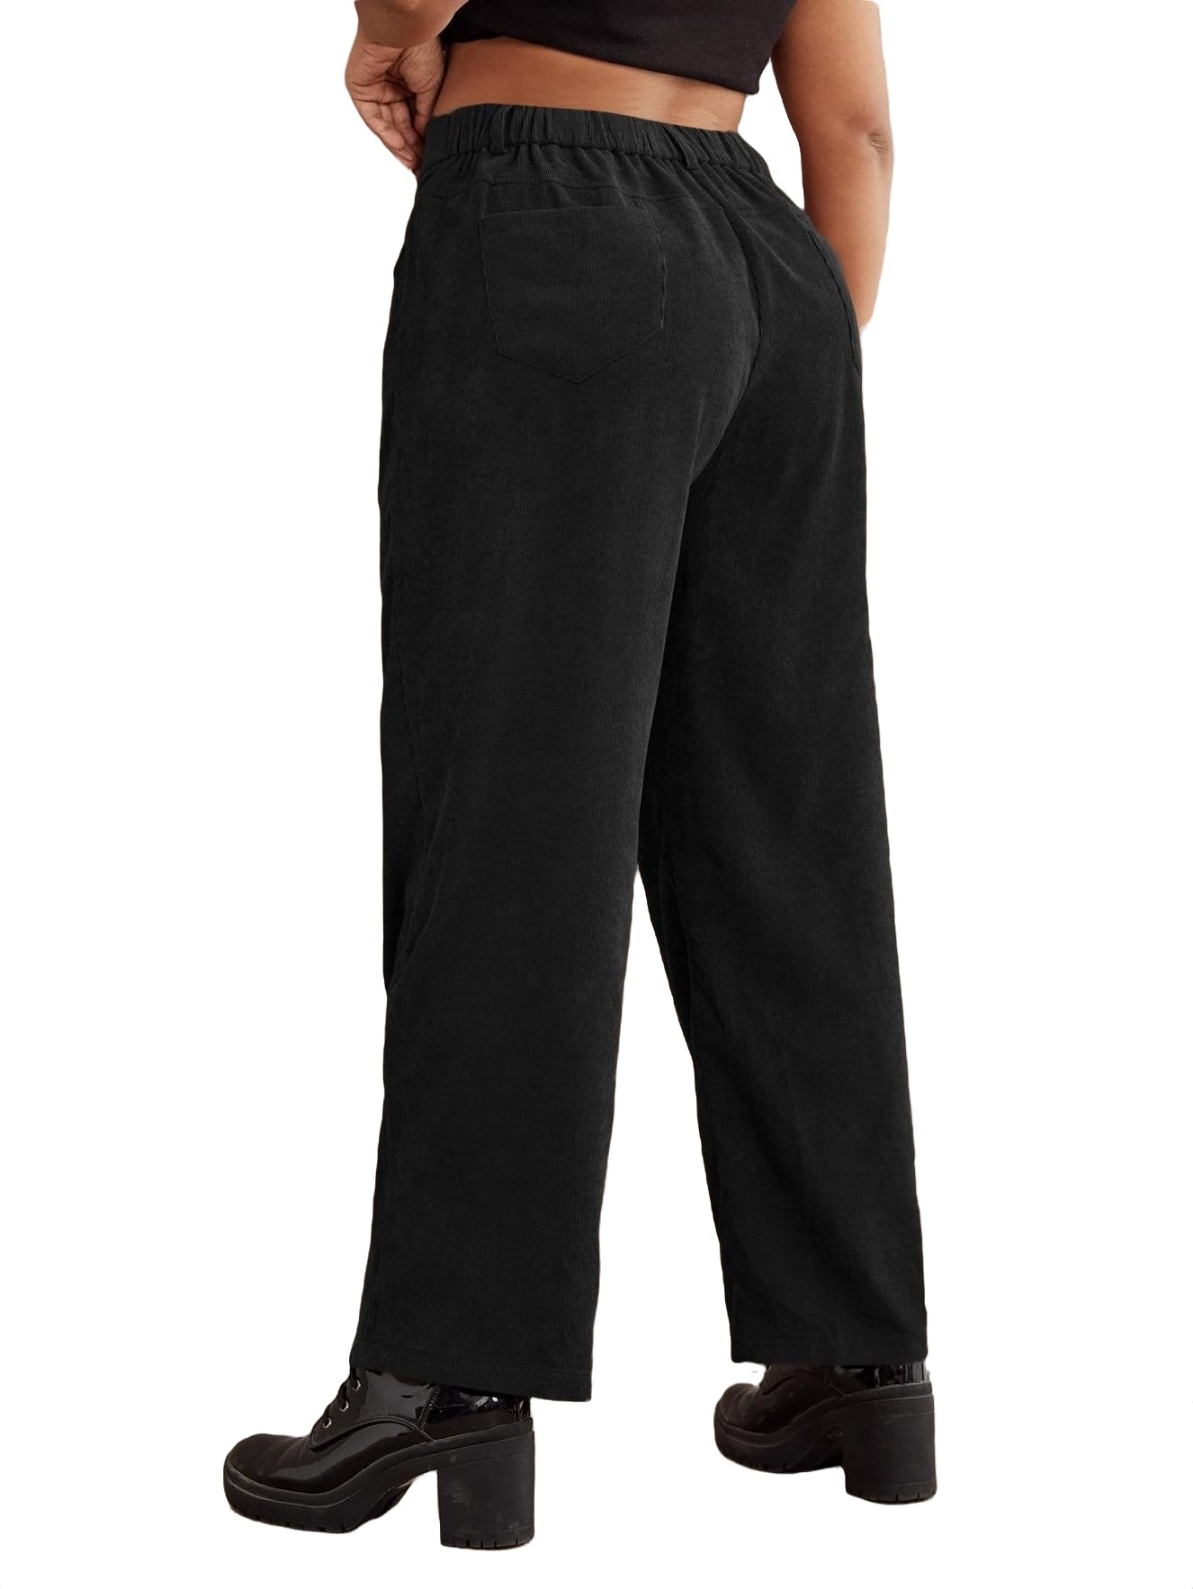 Women's Plus Size Casual High Waist Straight Wide Leg Slant Pocket Pants  Corduroy Trousers 2XL(16)